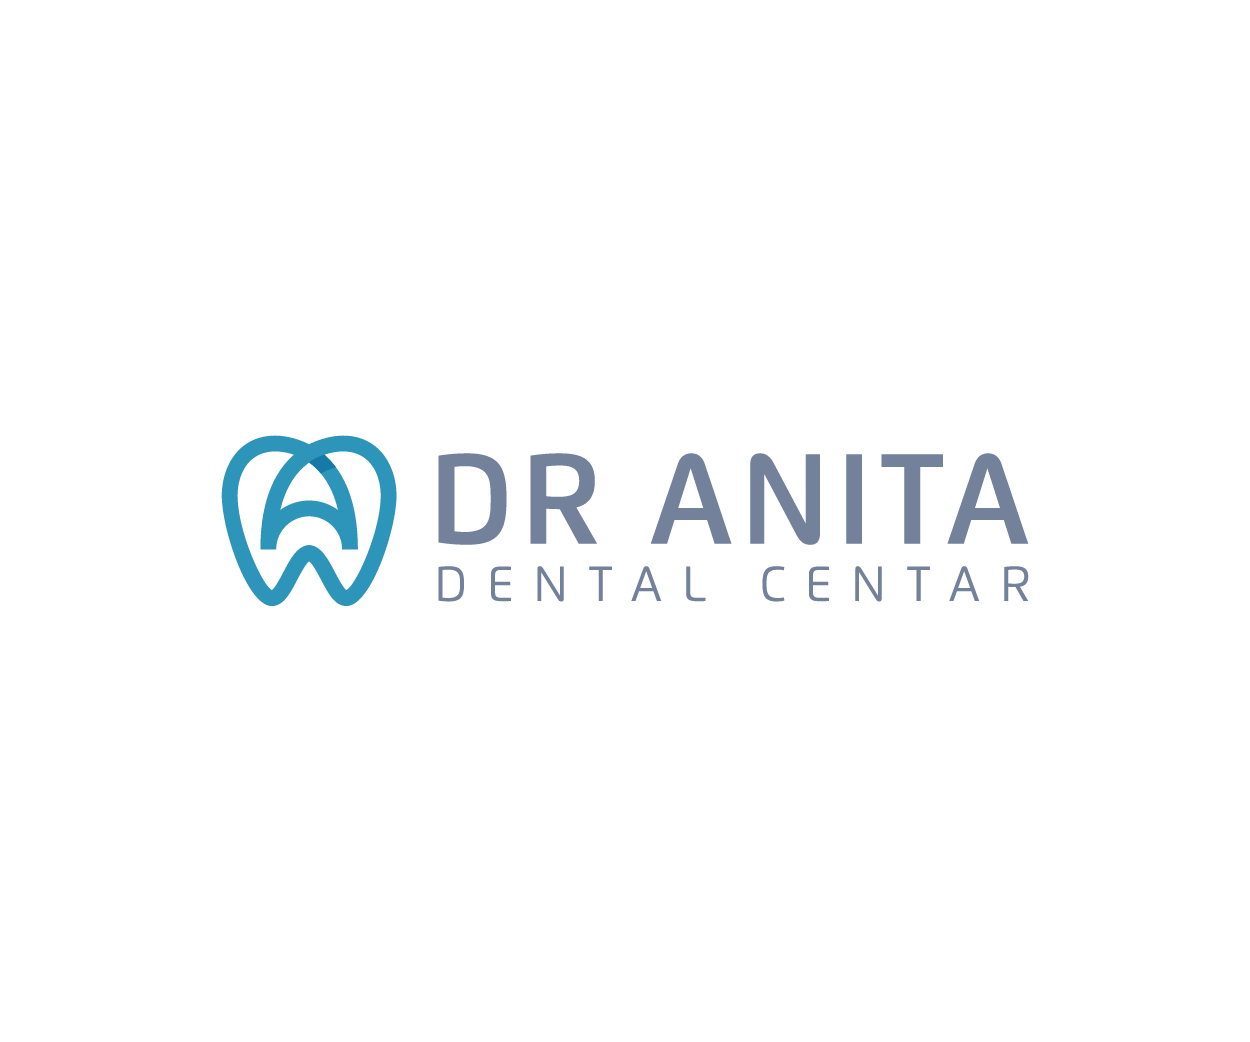 DR Anita Dental Center Logo Design